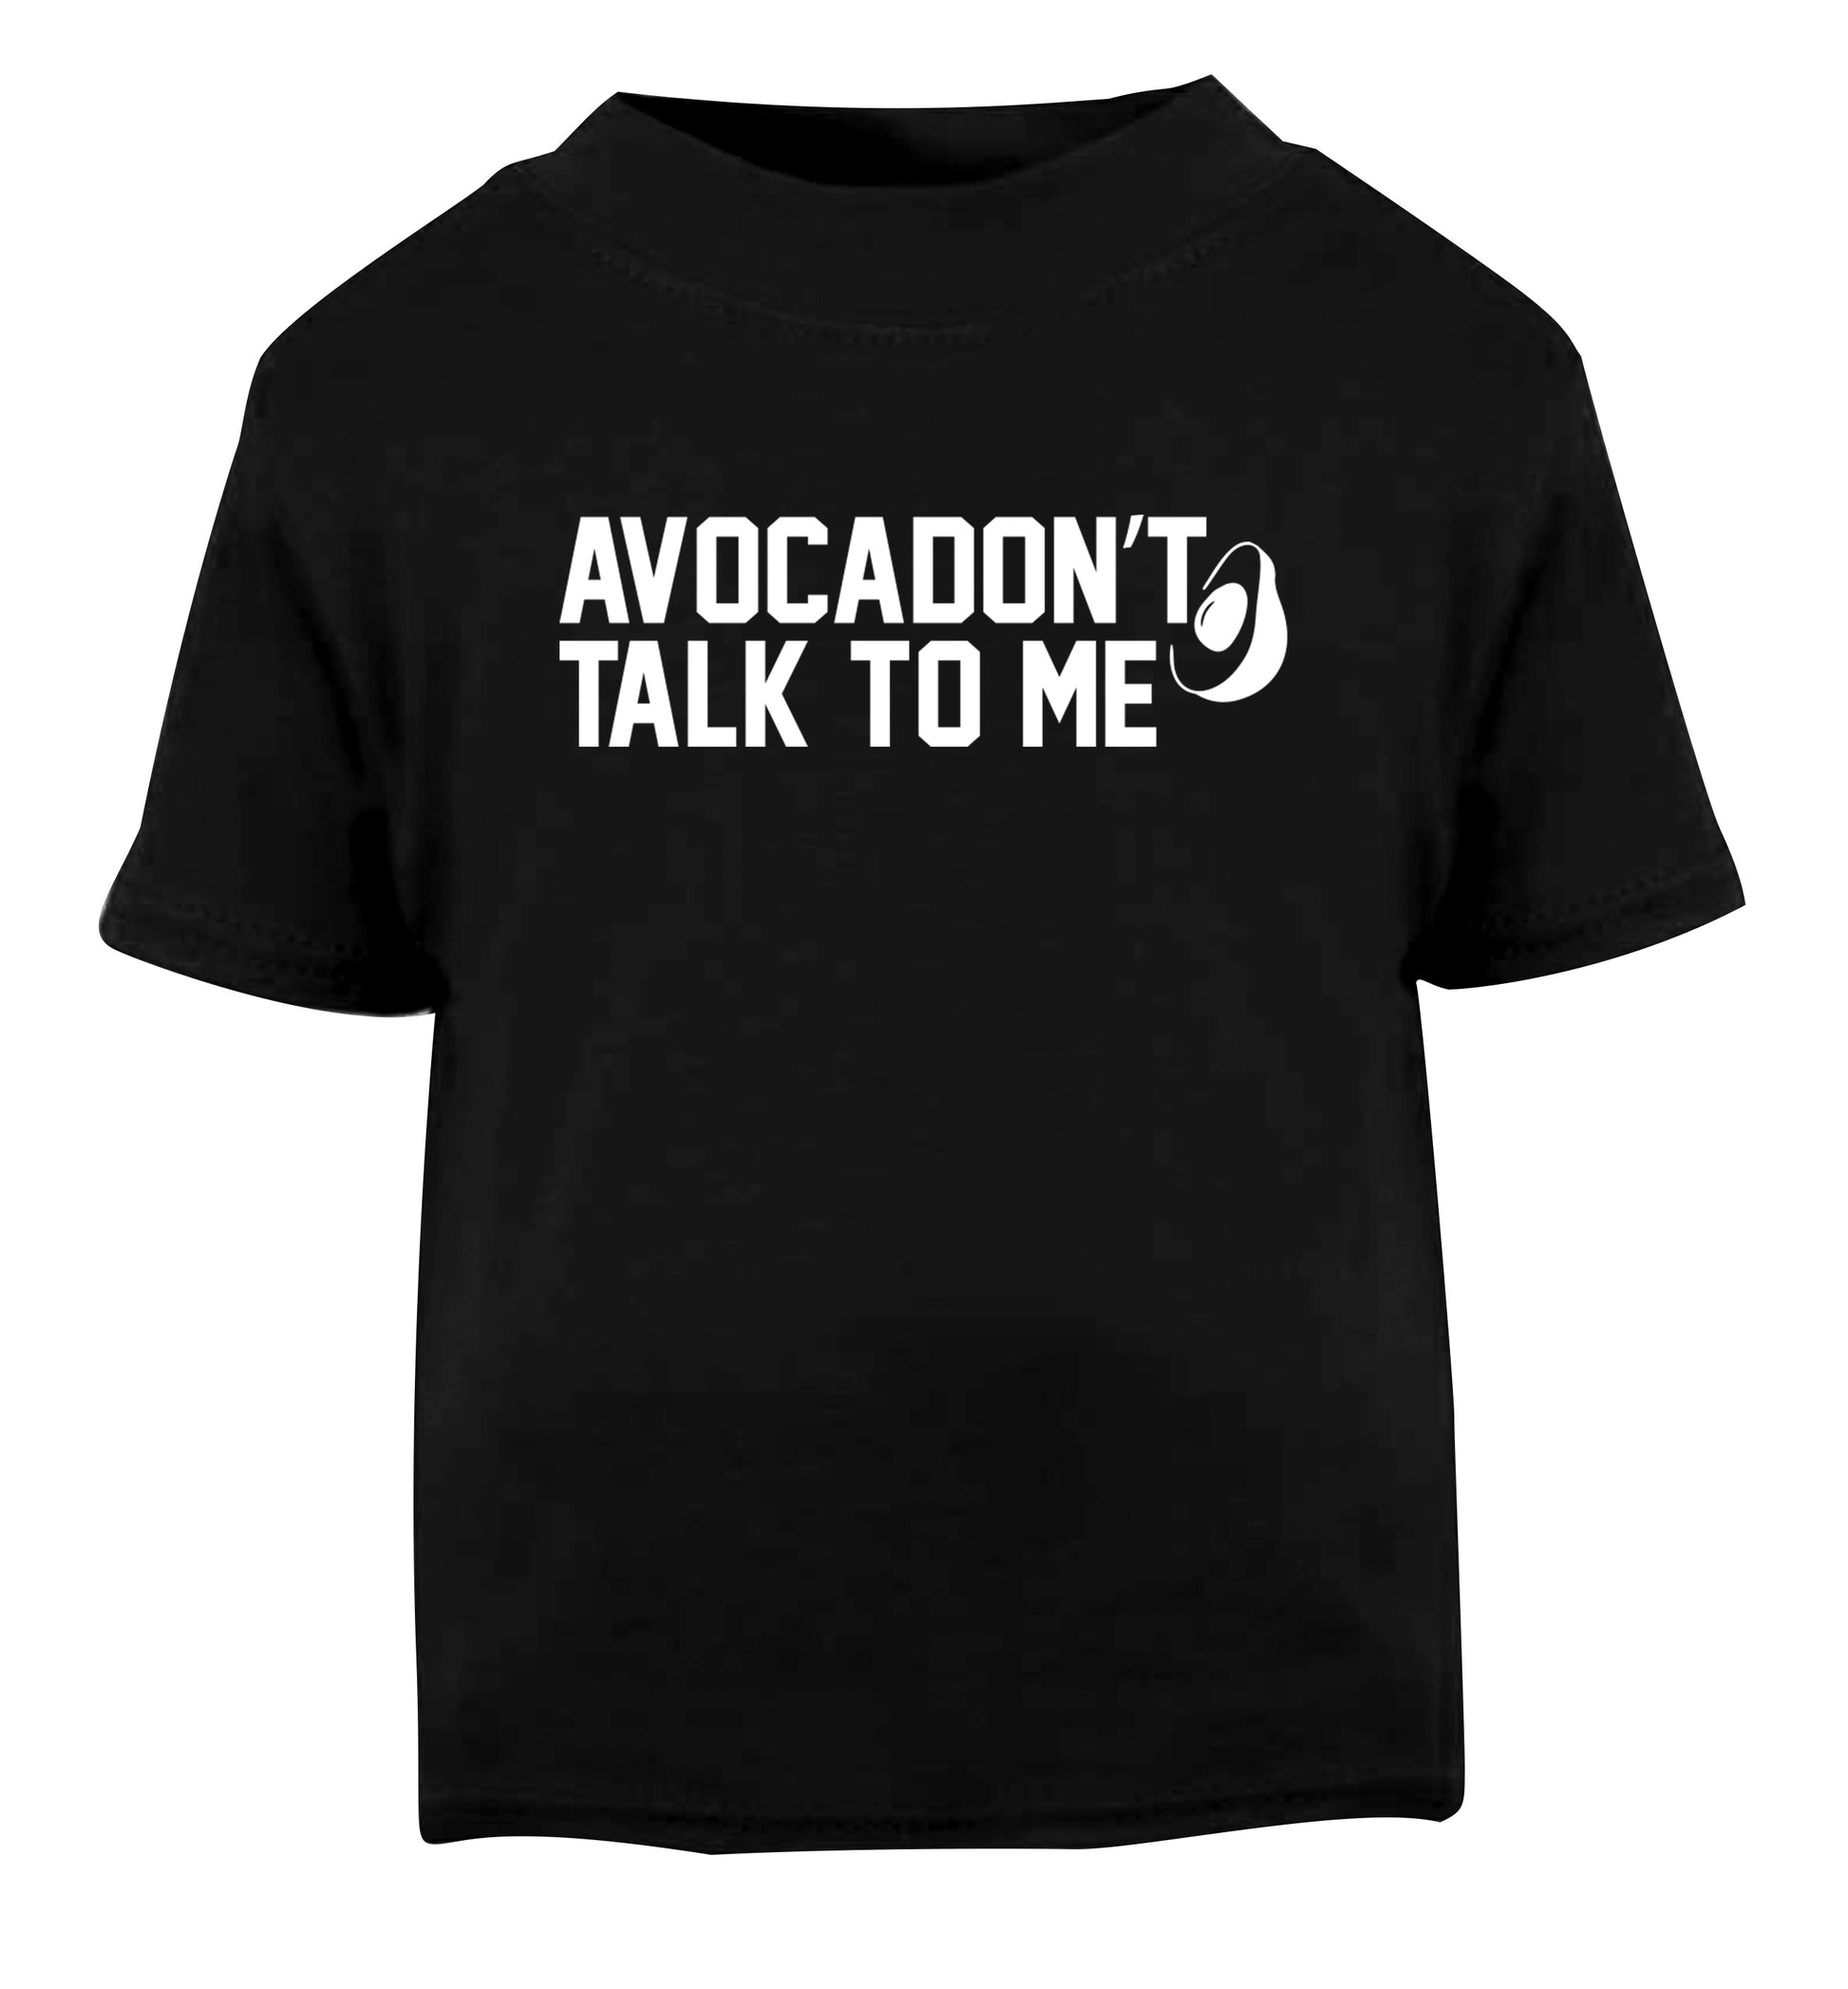 Avocadon't talk to me Black Baby Toddler Tshirt 2 years